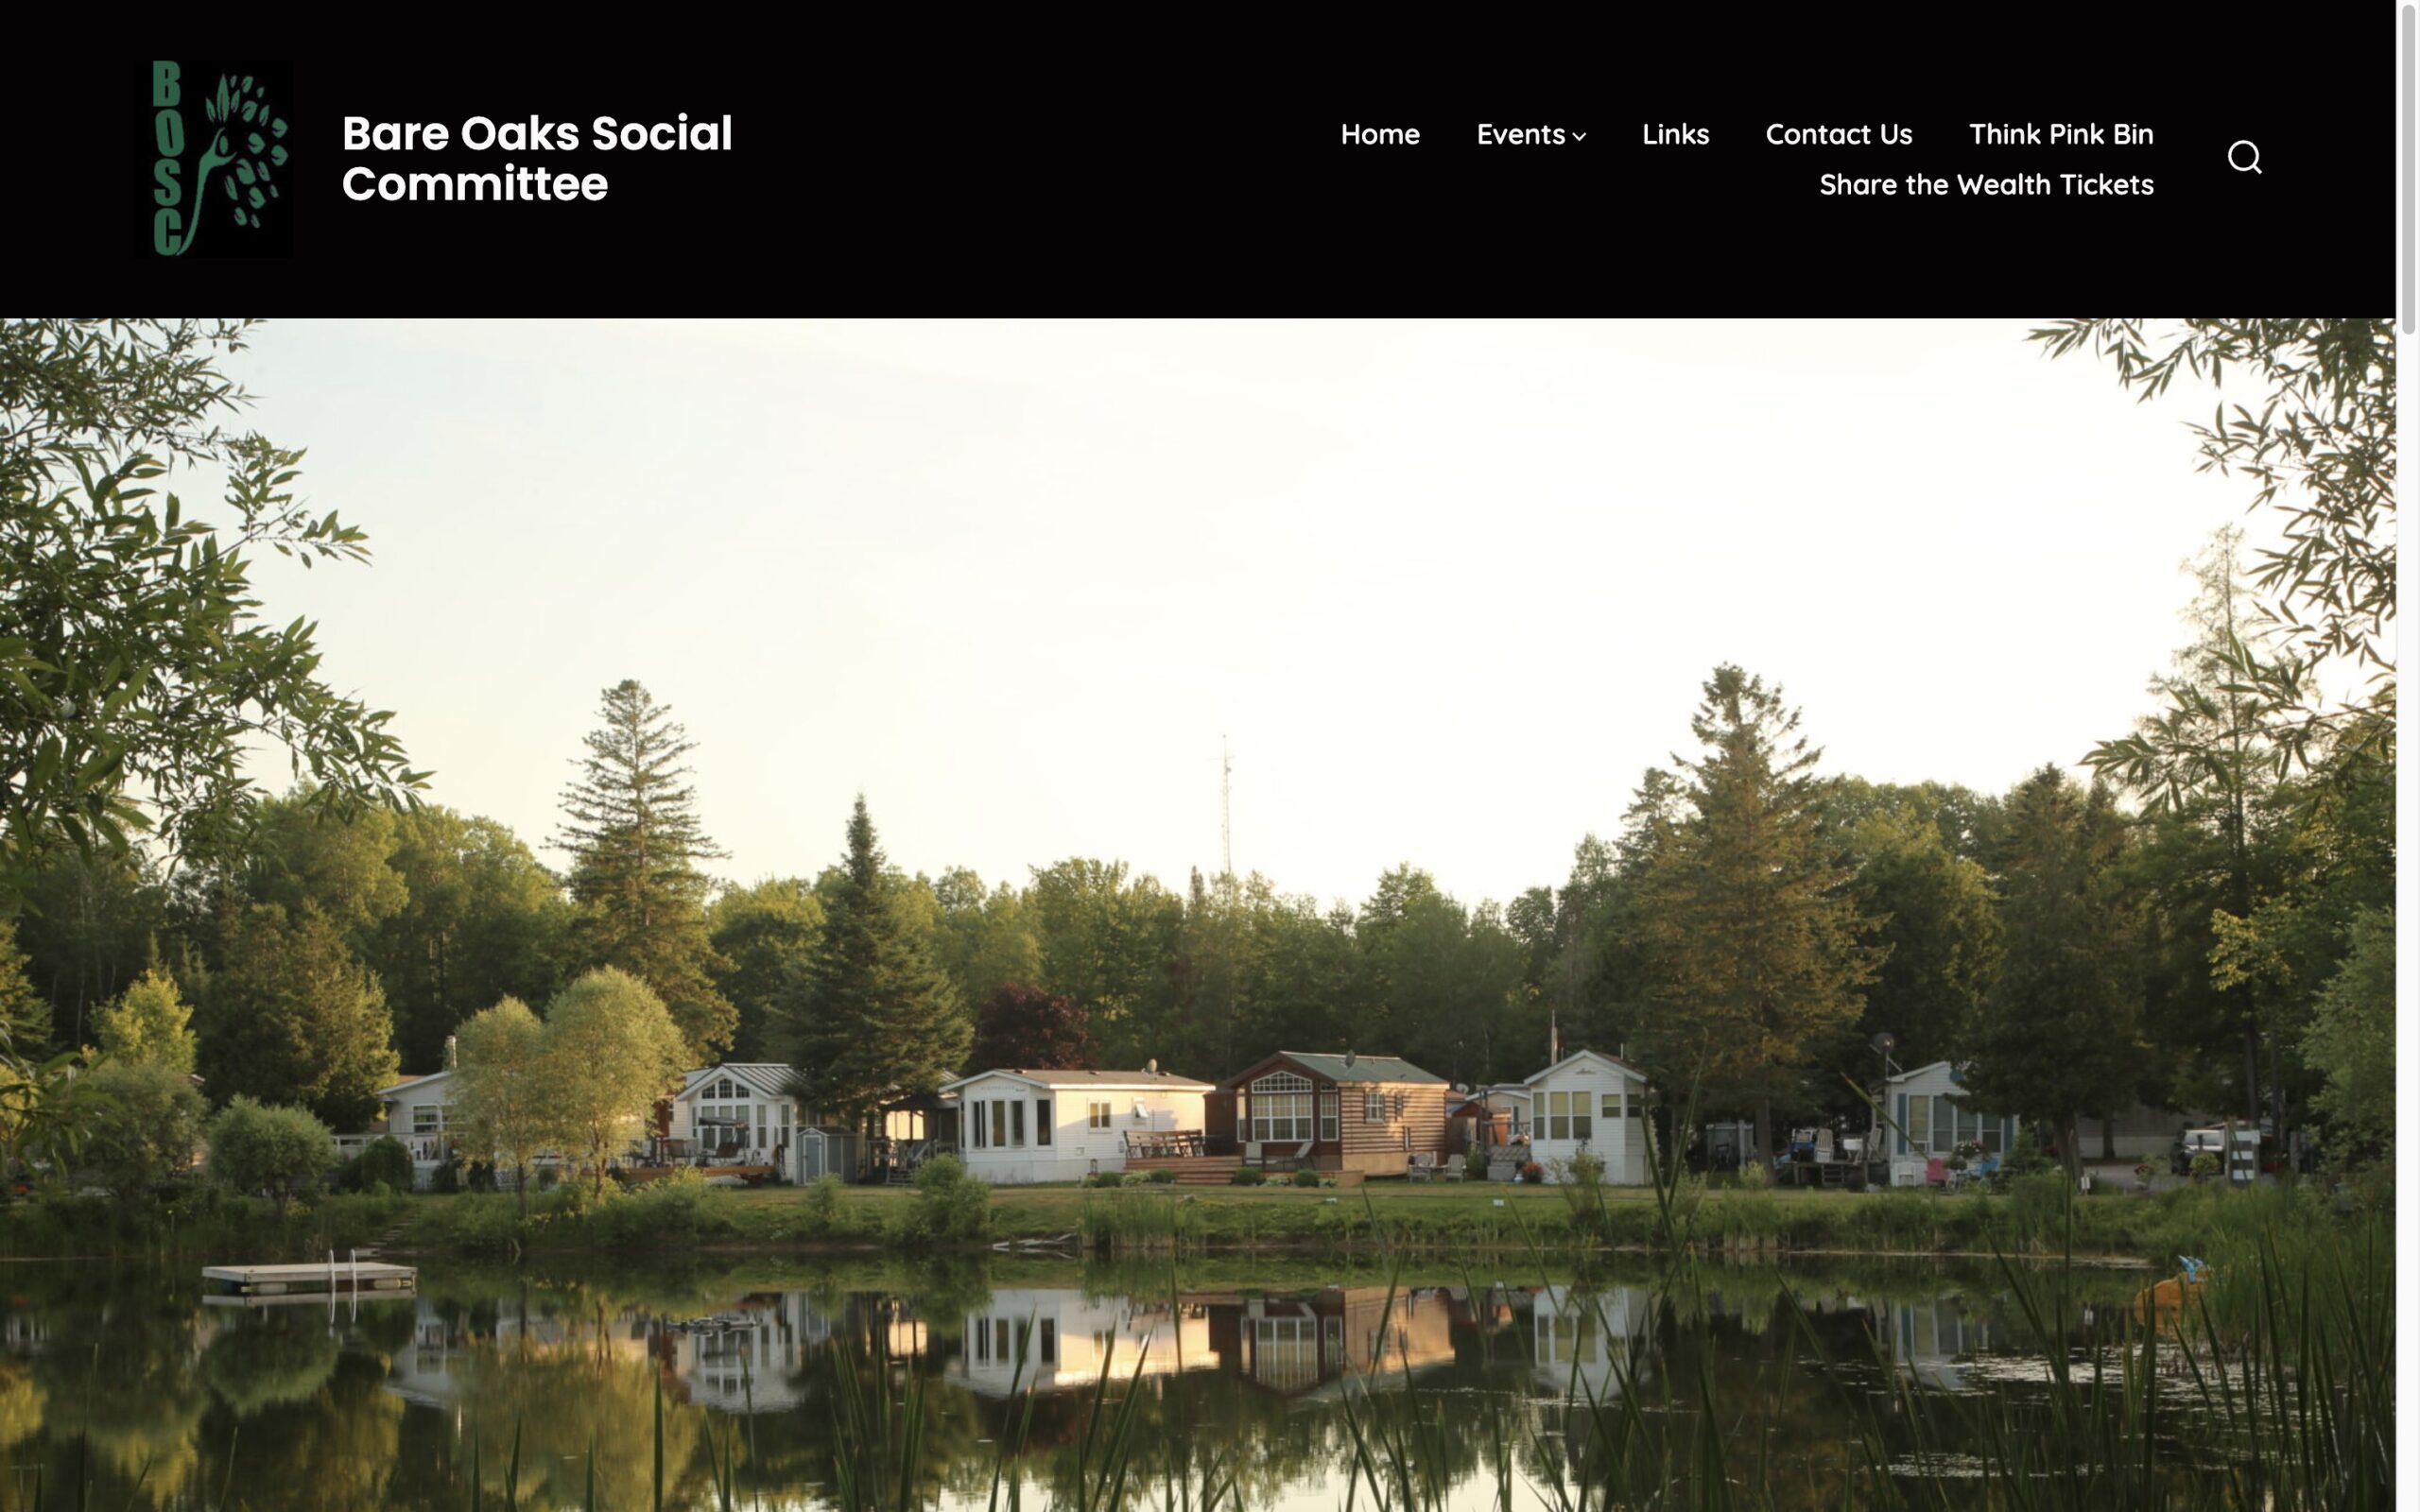 Bare Oaks Social Committee website